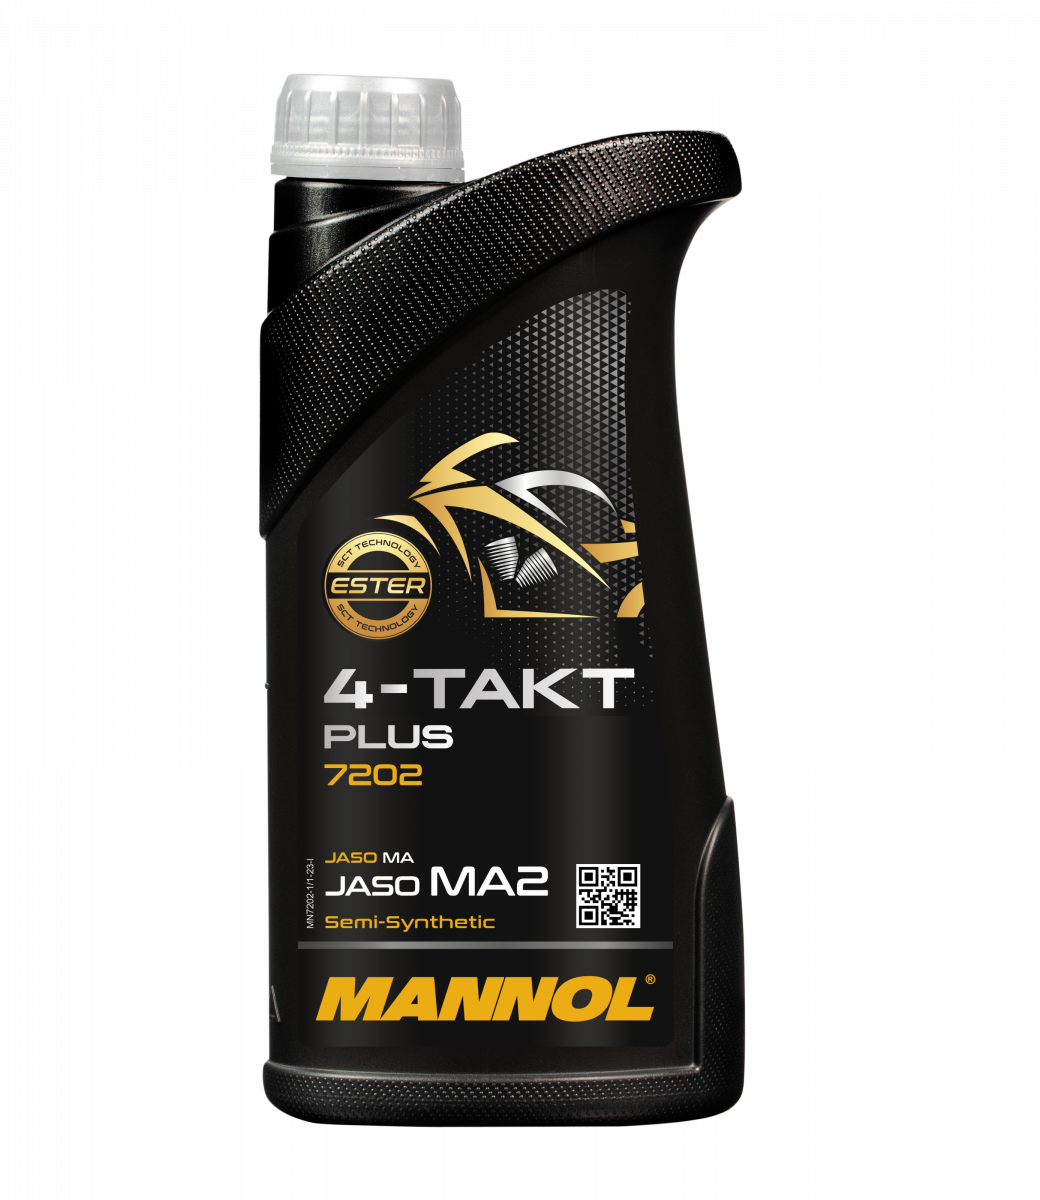 Моторное масло Mannol 4-Takt Plus API SL 1л